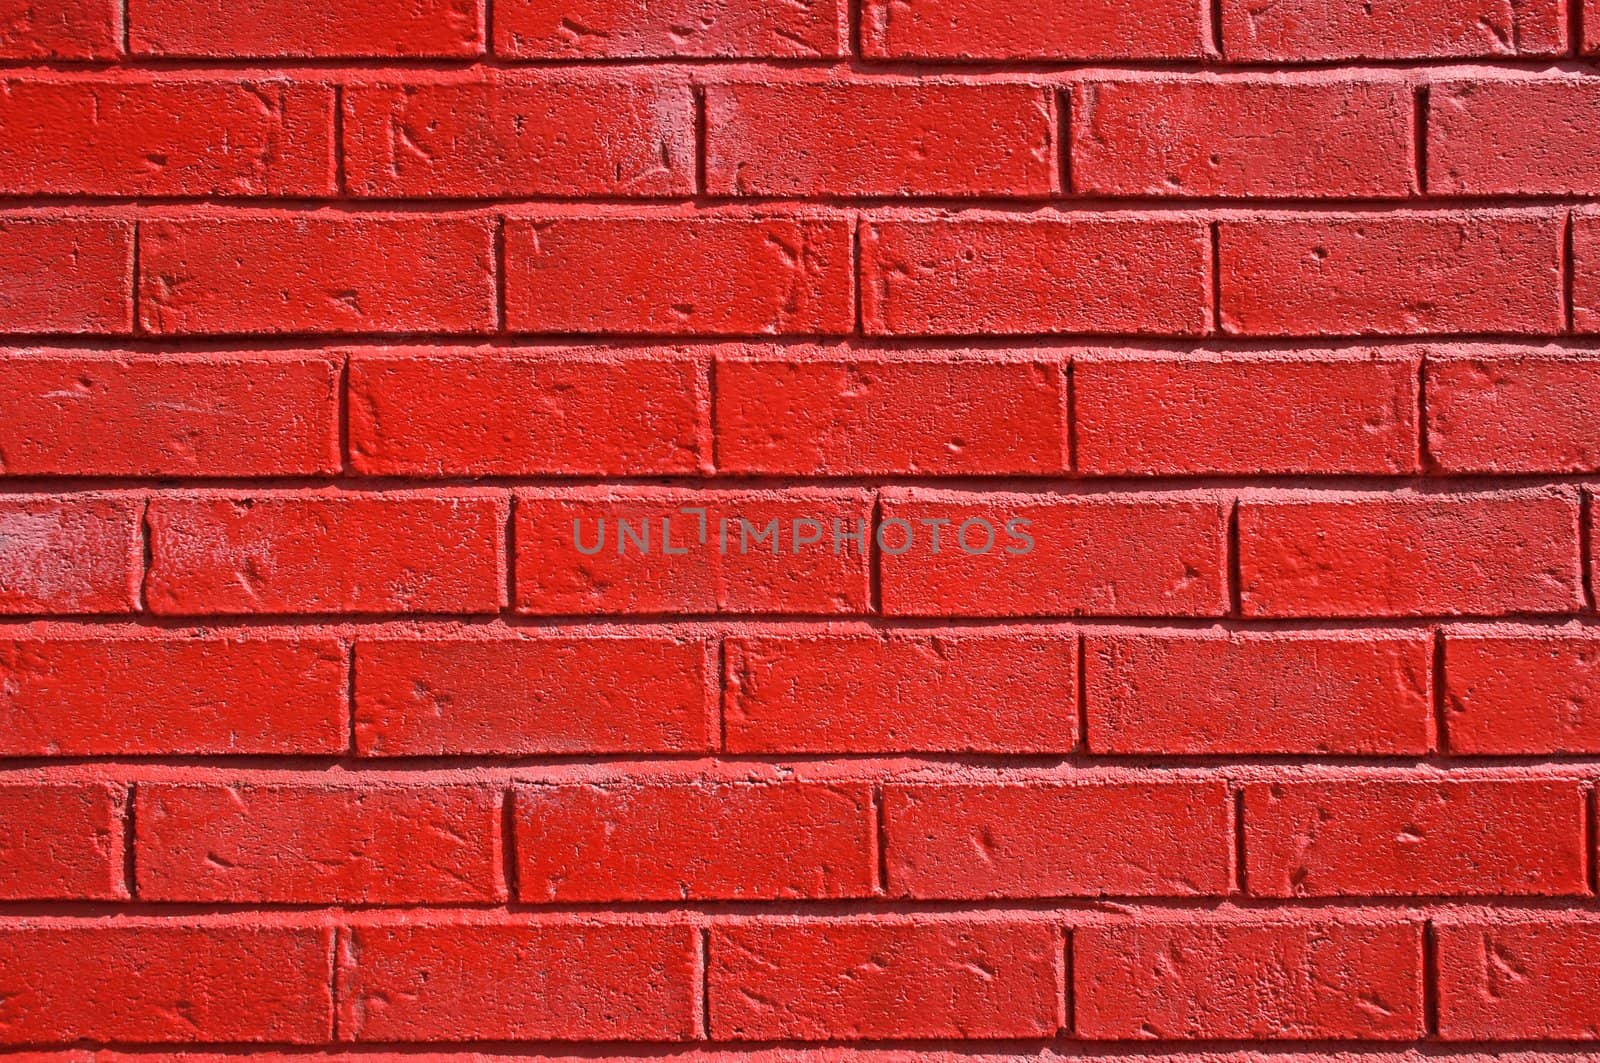 Red painted brick wall by anikasalsera